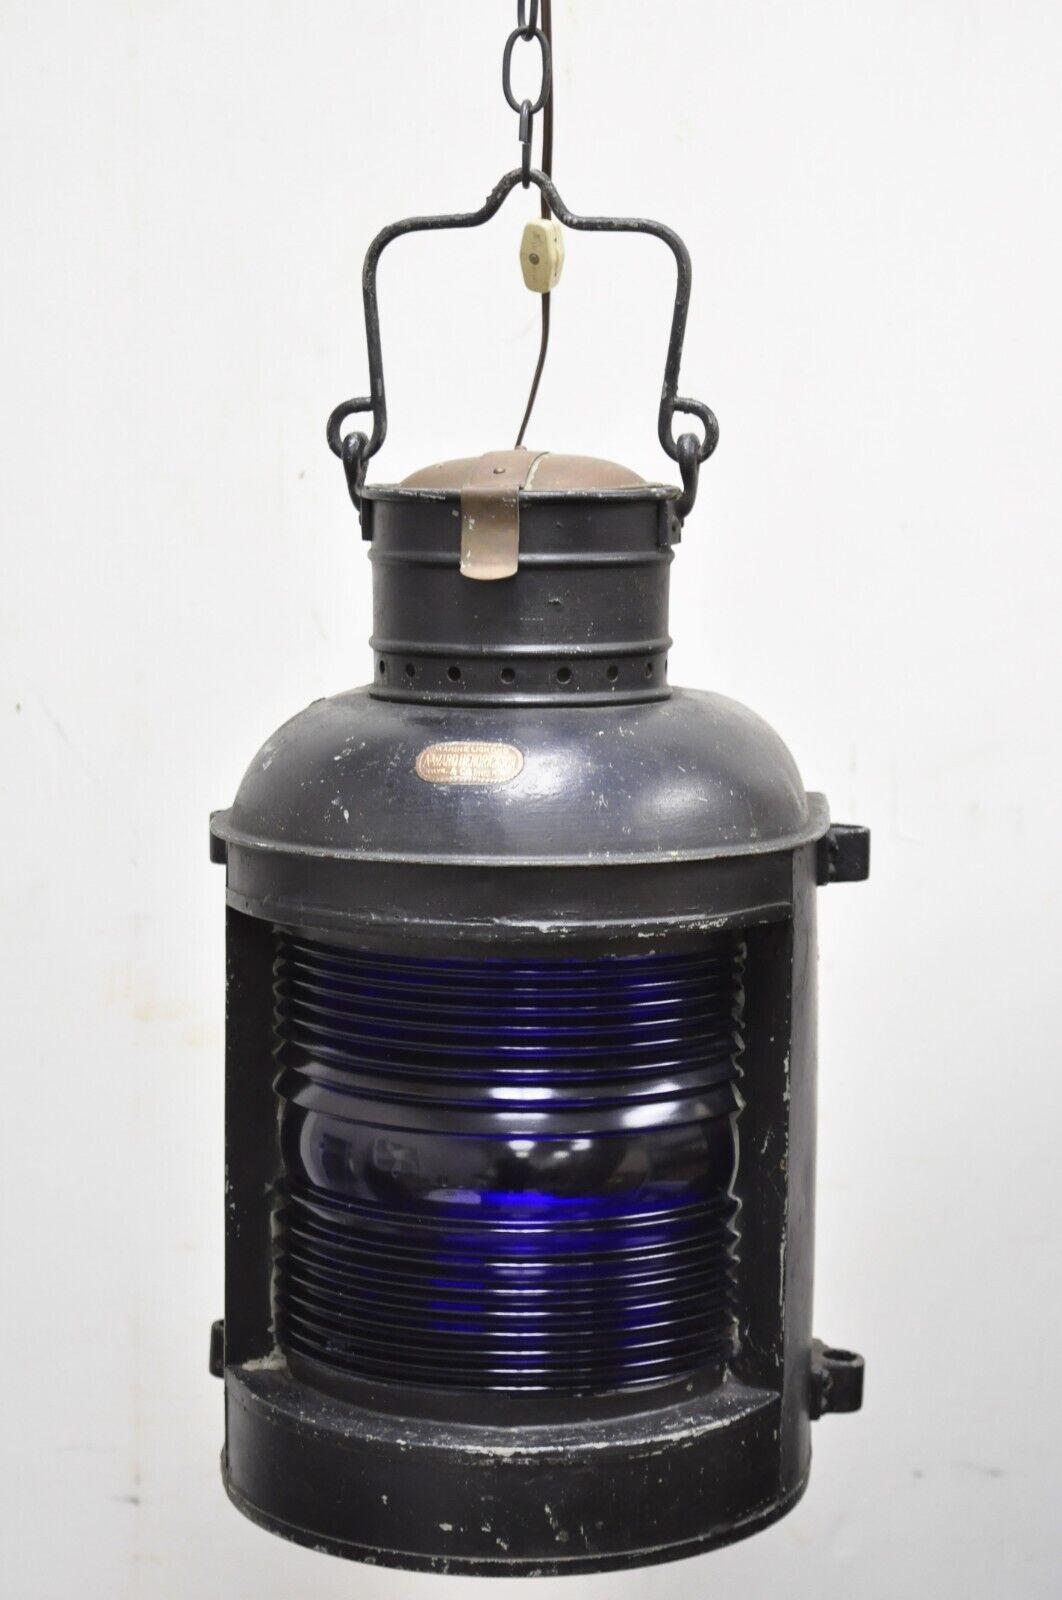 A Ward Hendrickson Marine masthead ship lantern cobalt blue lens hanging fixture. Item features a rare cobalt blue glass fresnel lens, steel metal frame, original label, very nice antique item, converted into a functioning light fixture. Circa early